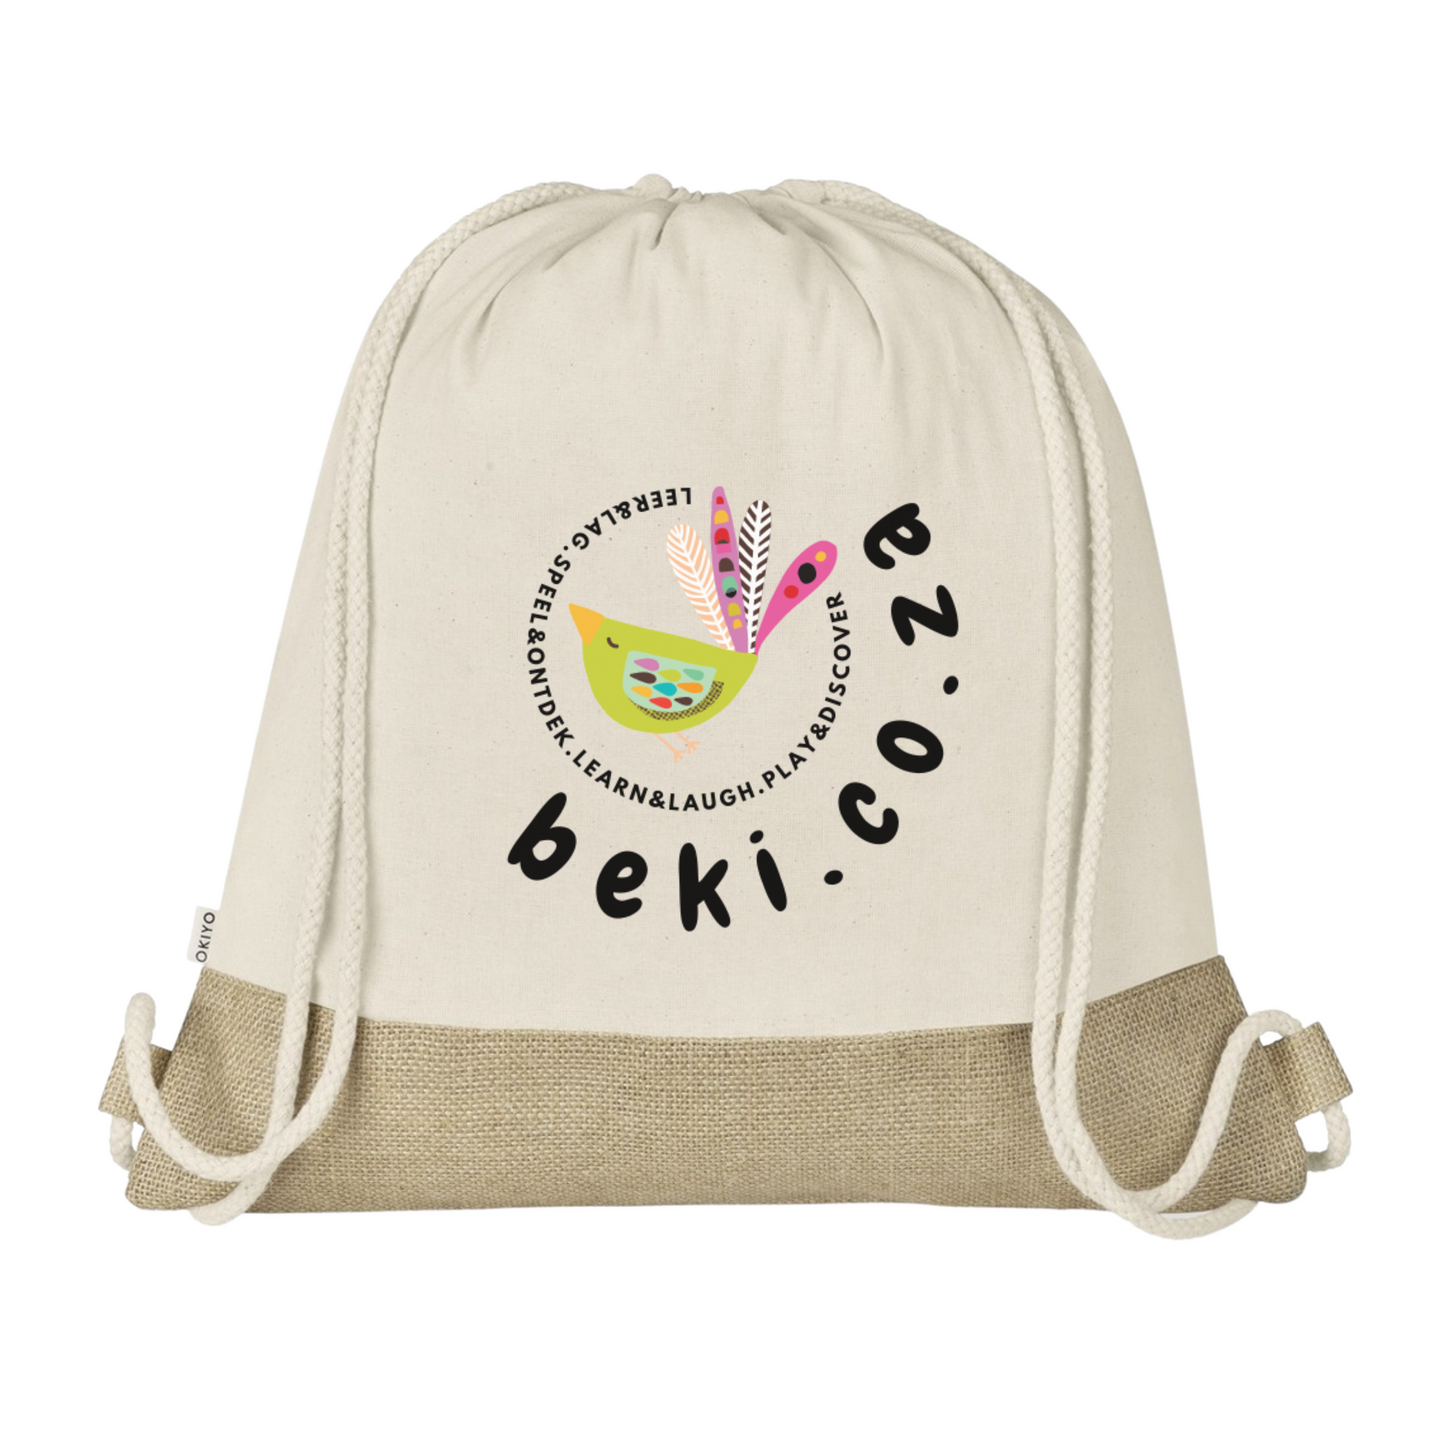 Beki Drawstring backpack